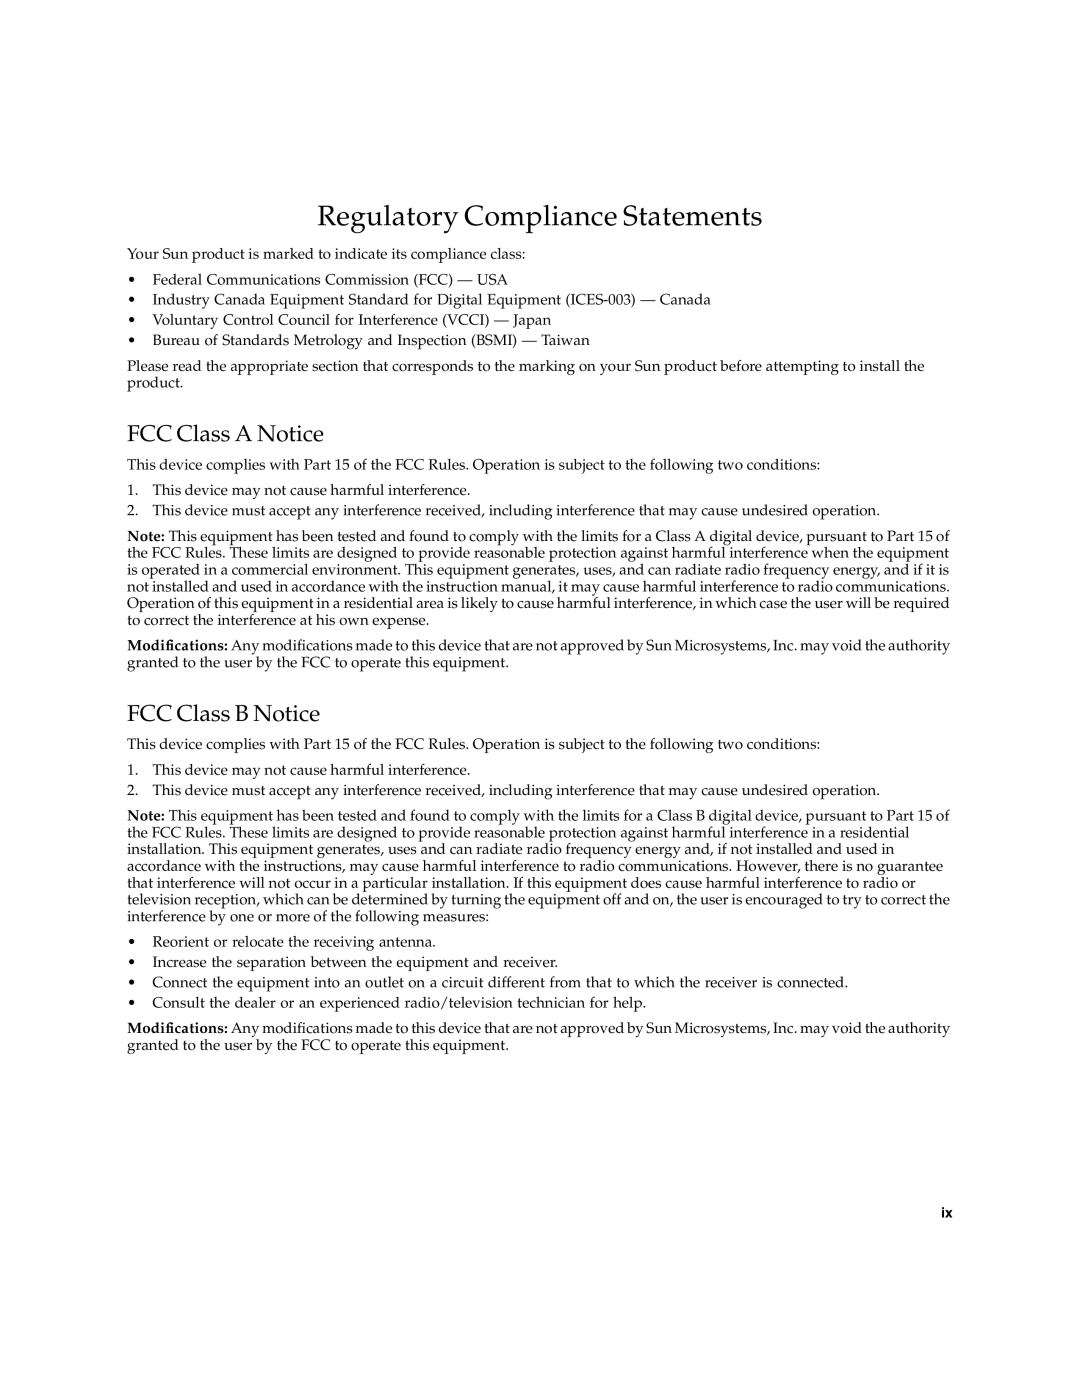 Sun Microsystems Gigabit Ethernet MMF/UTP Adapter Regulatory Compliance Statements, FCC Class A Notice, FCC Class B Notice 